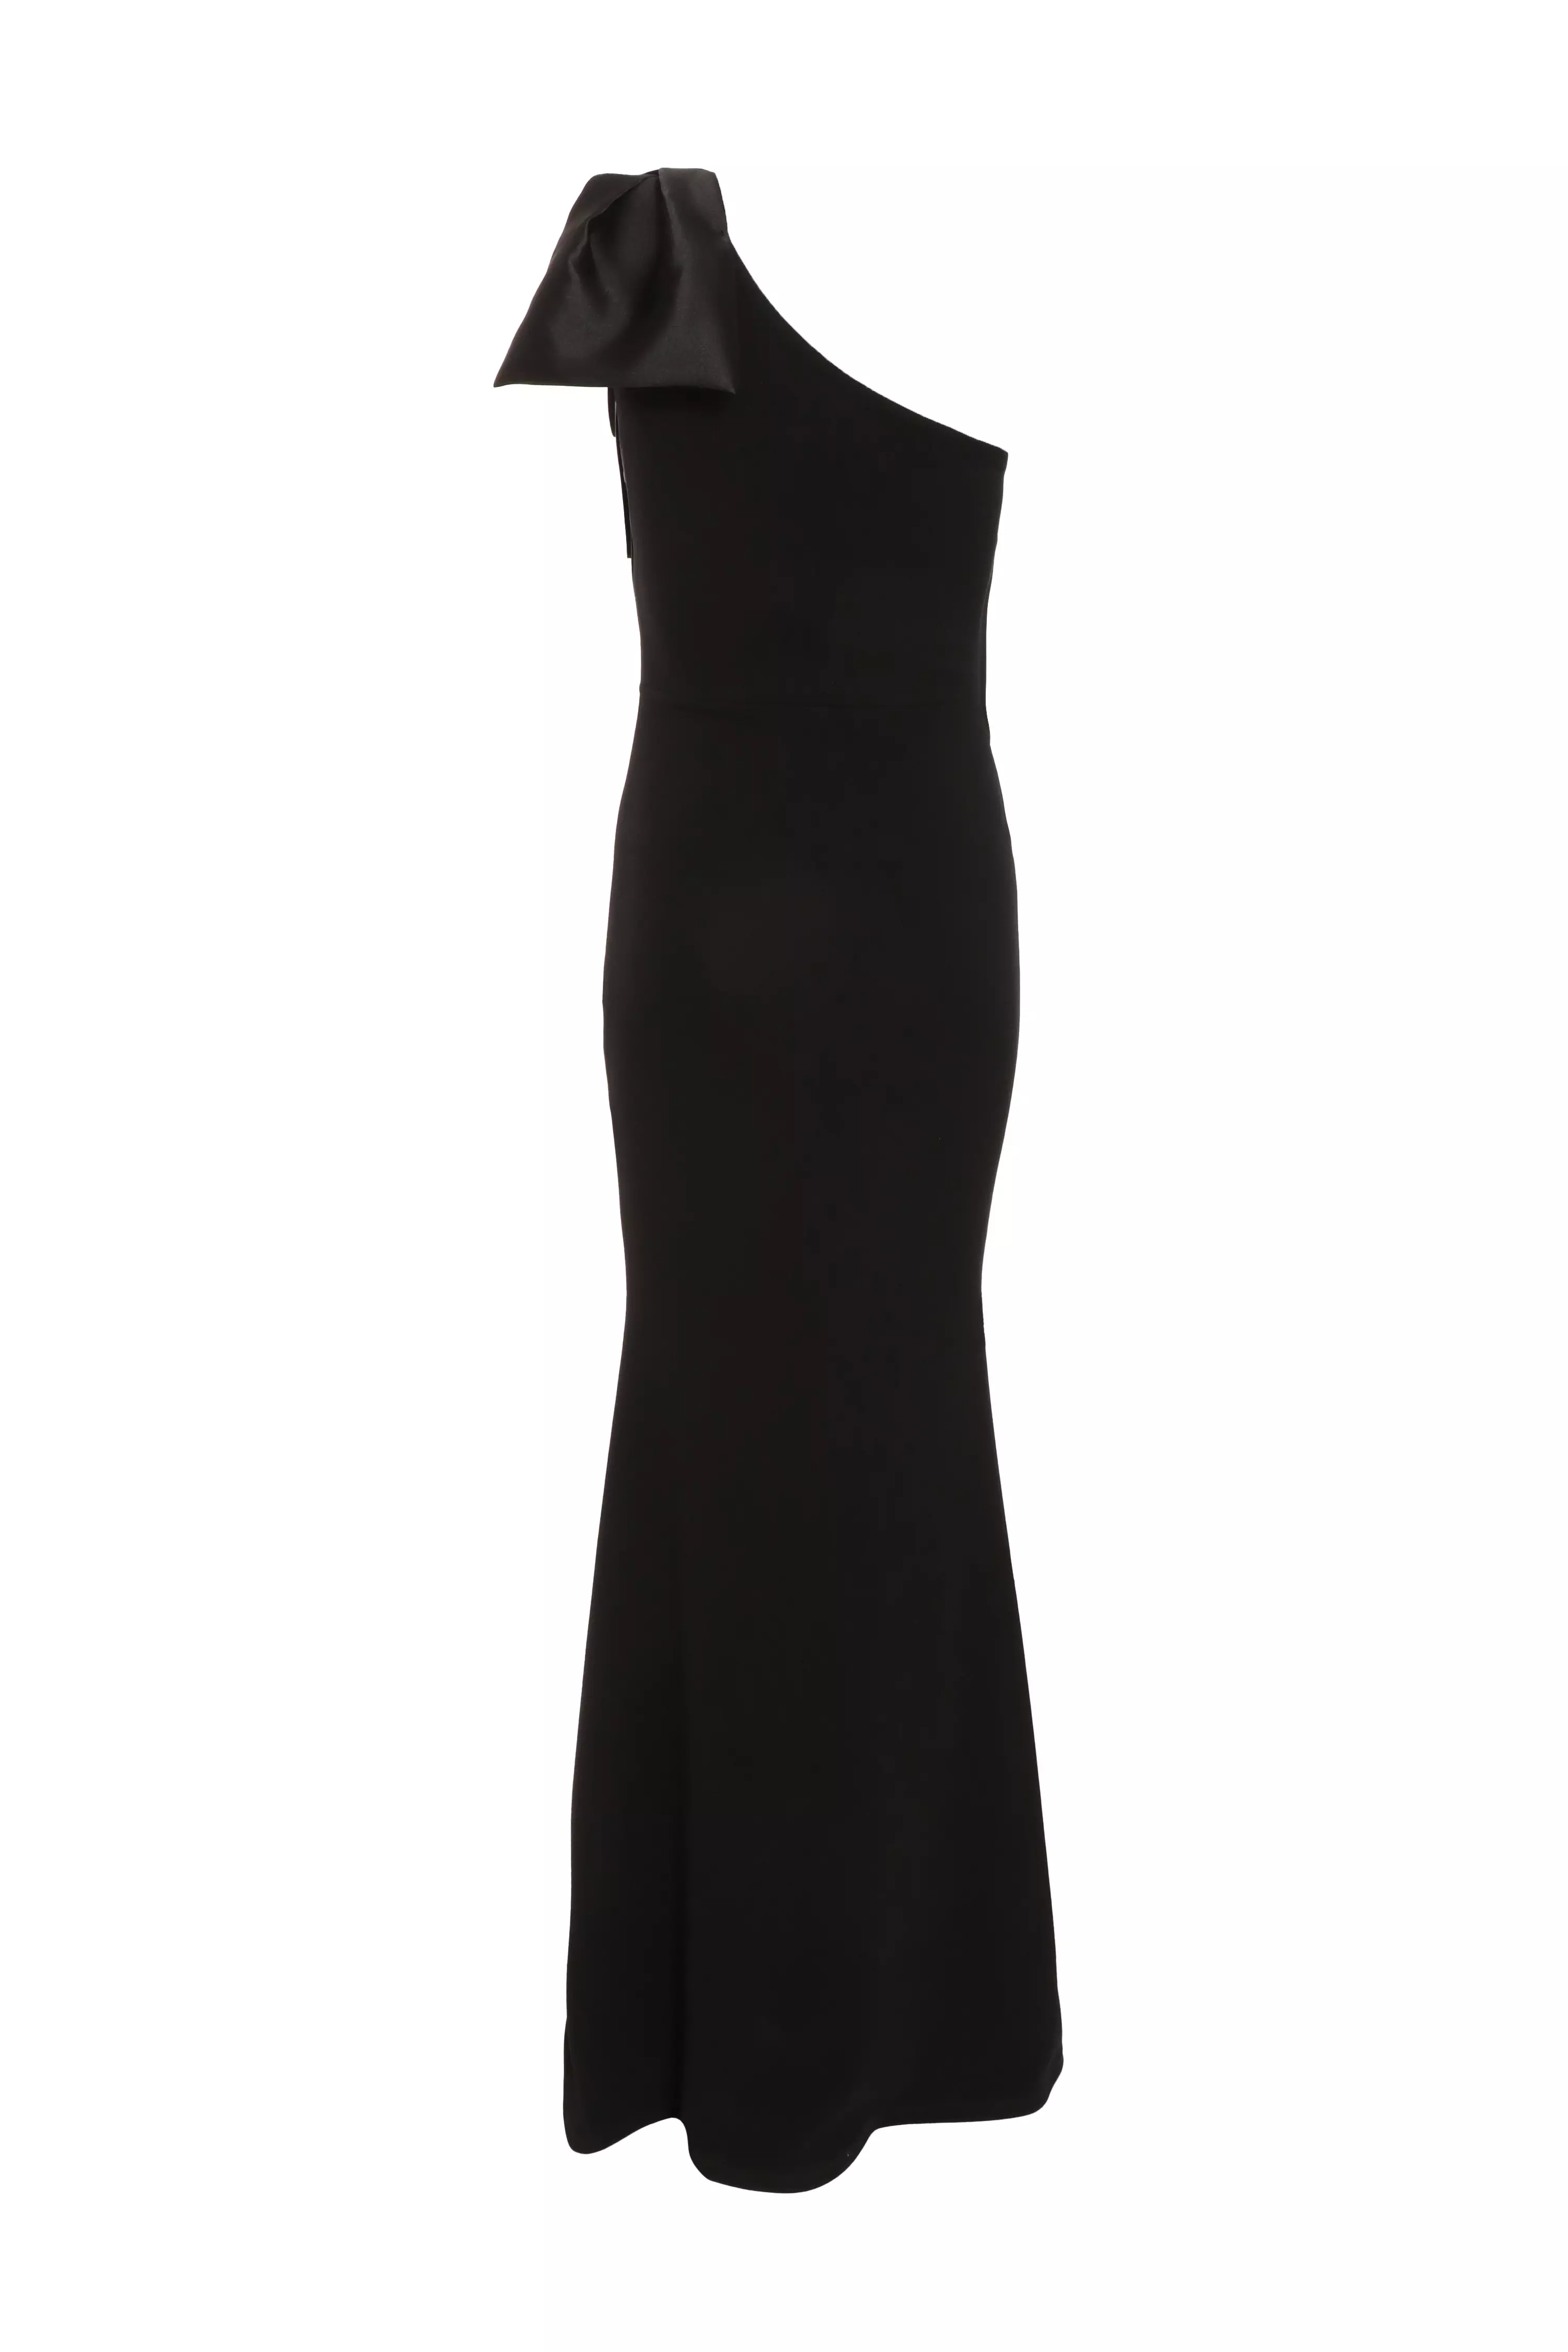 Black One Shoulder Bow Maxi Dress - QUIZ Clothing